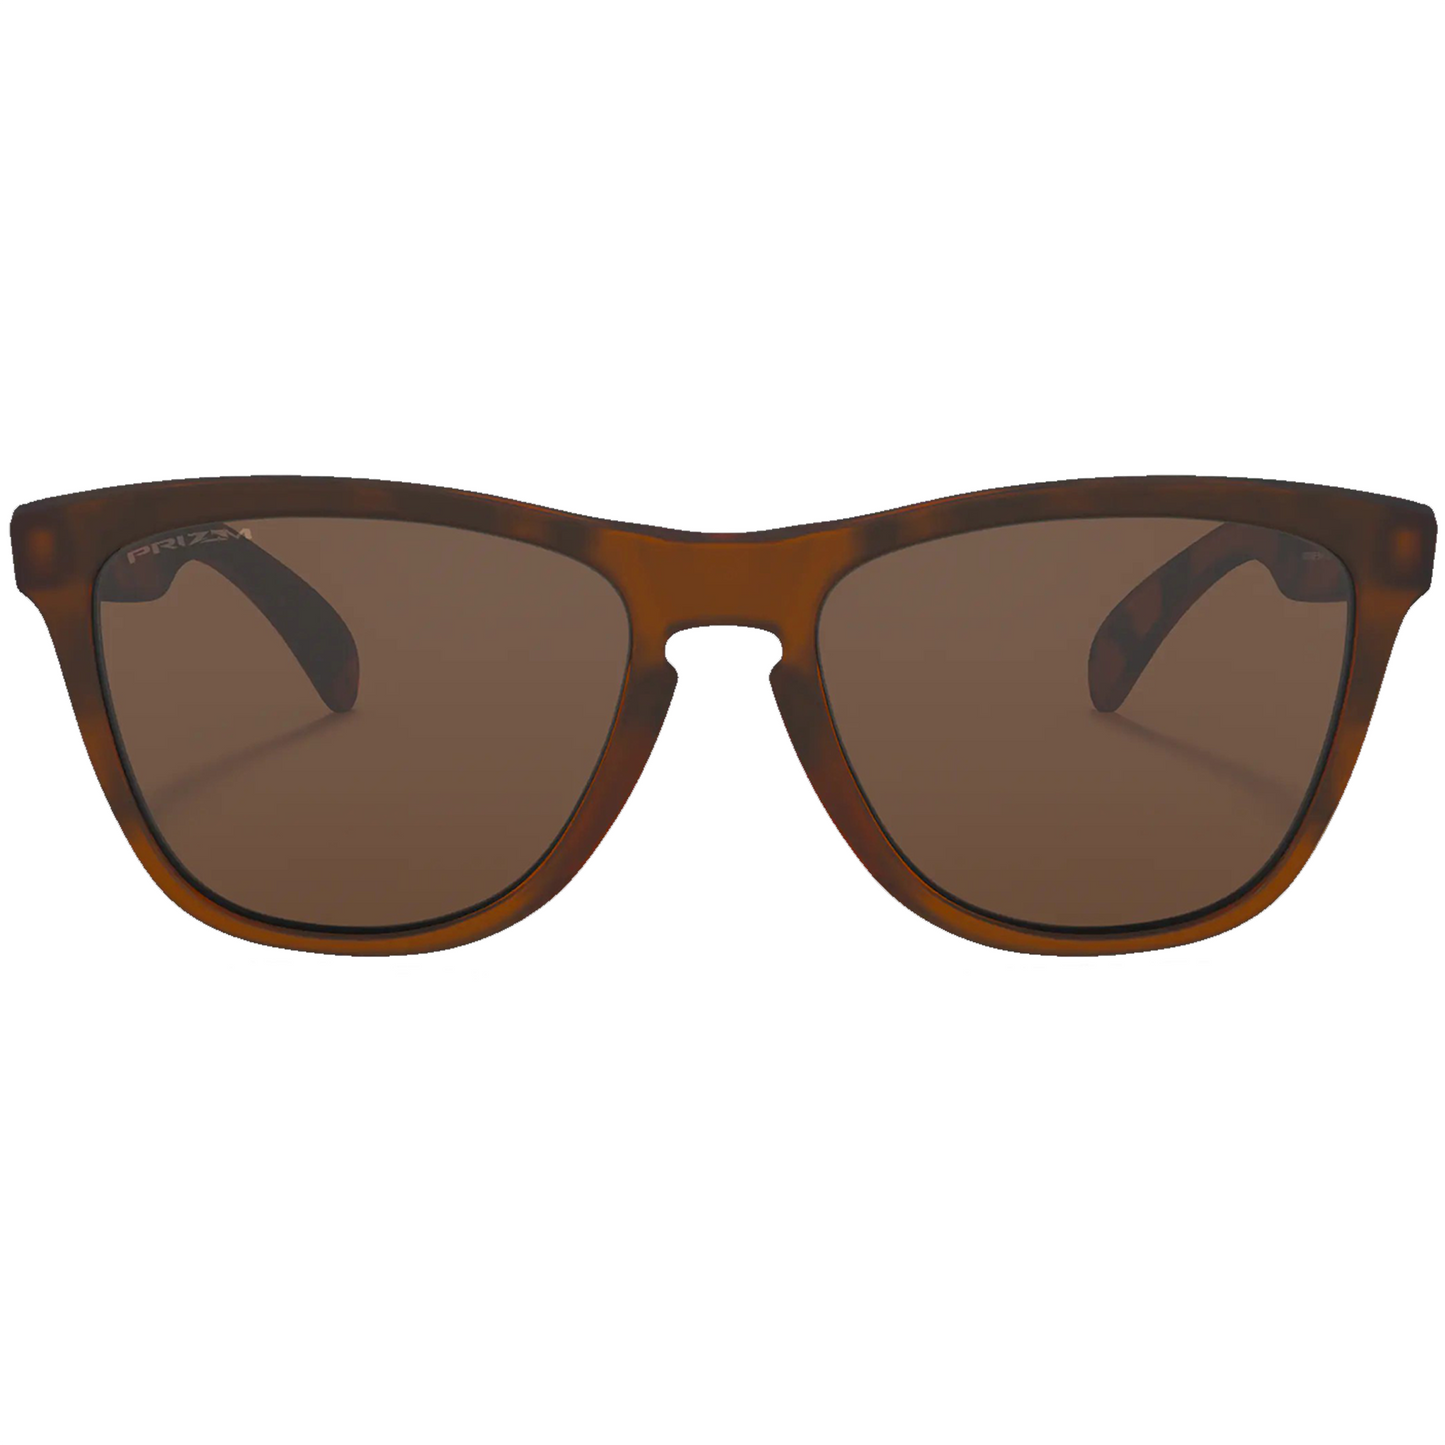 Oakley Frogskins Sunglasses (Matte Tortoise) Prizm Tungsten Lens - Free Case